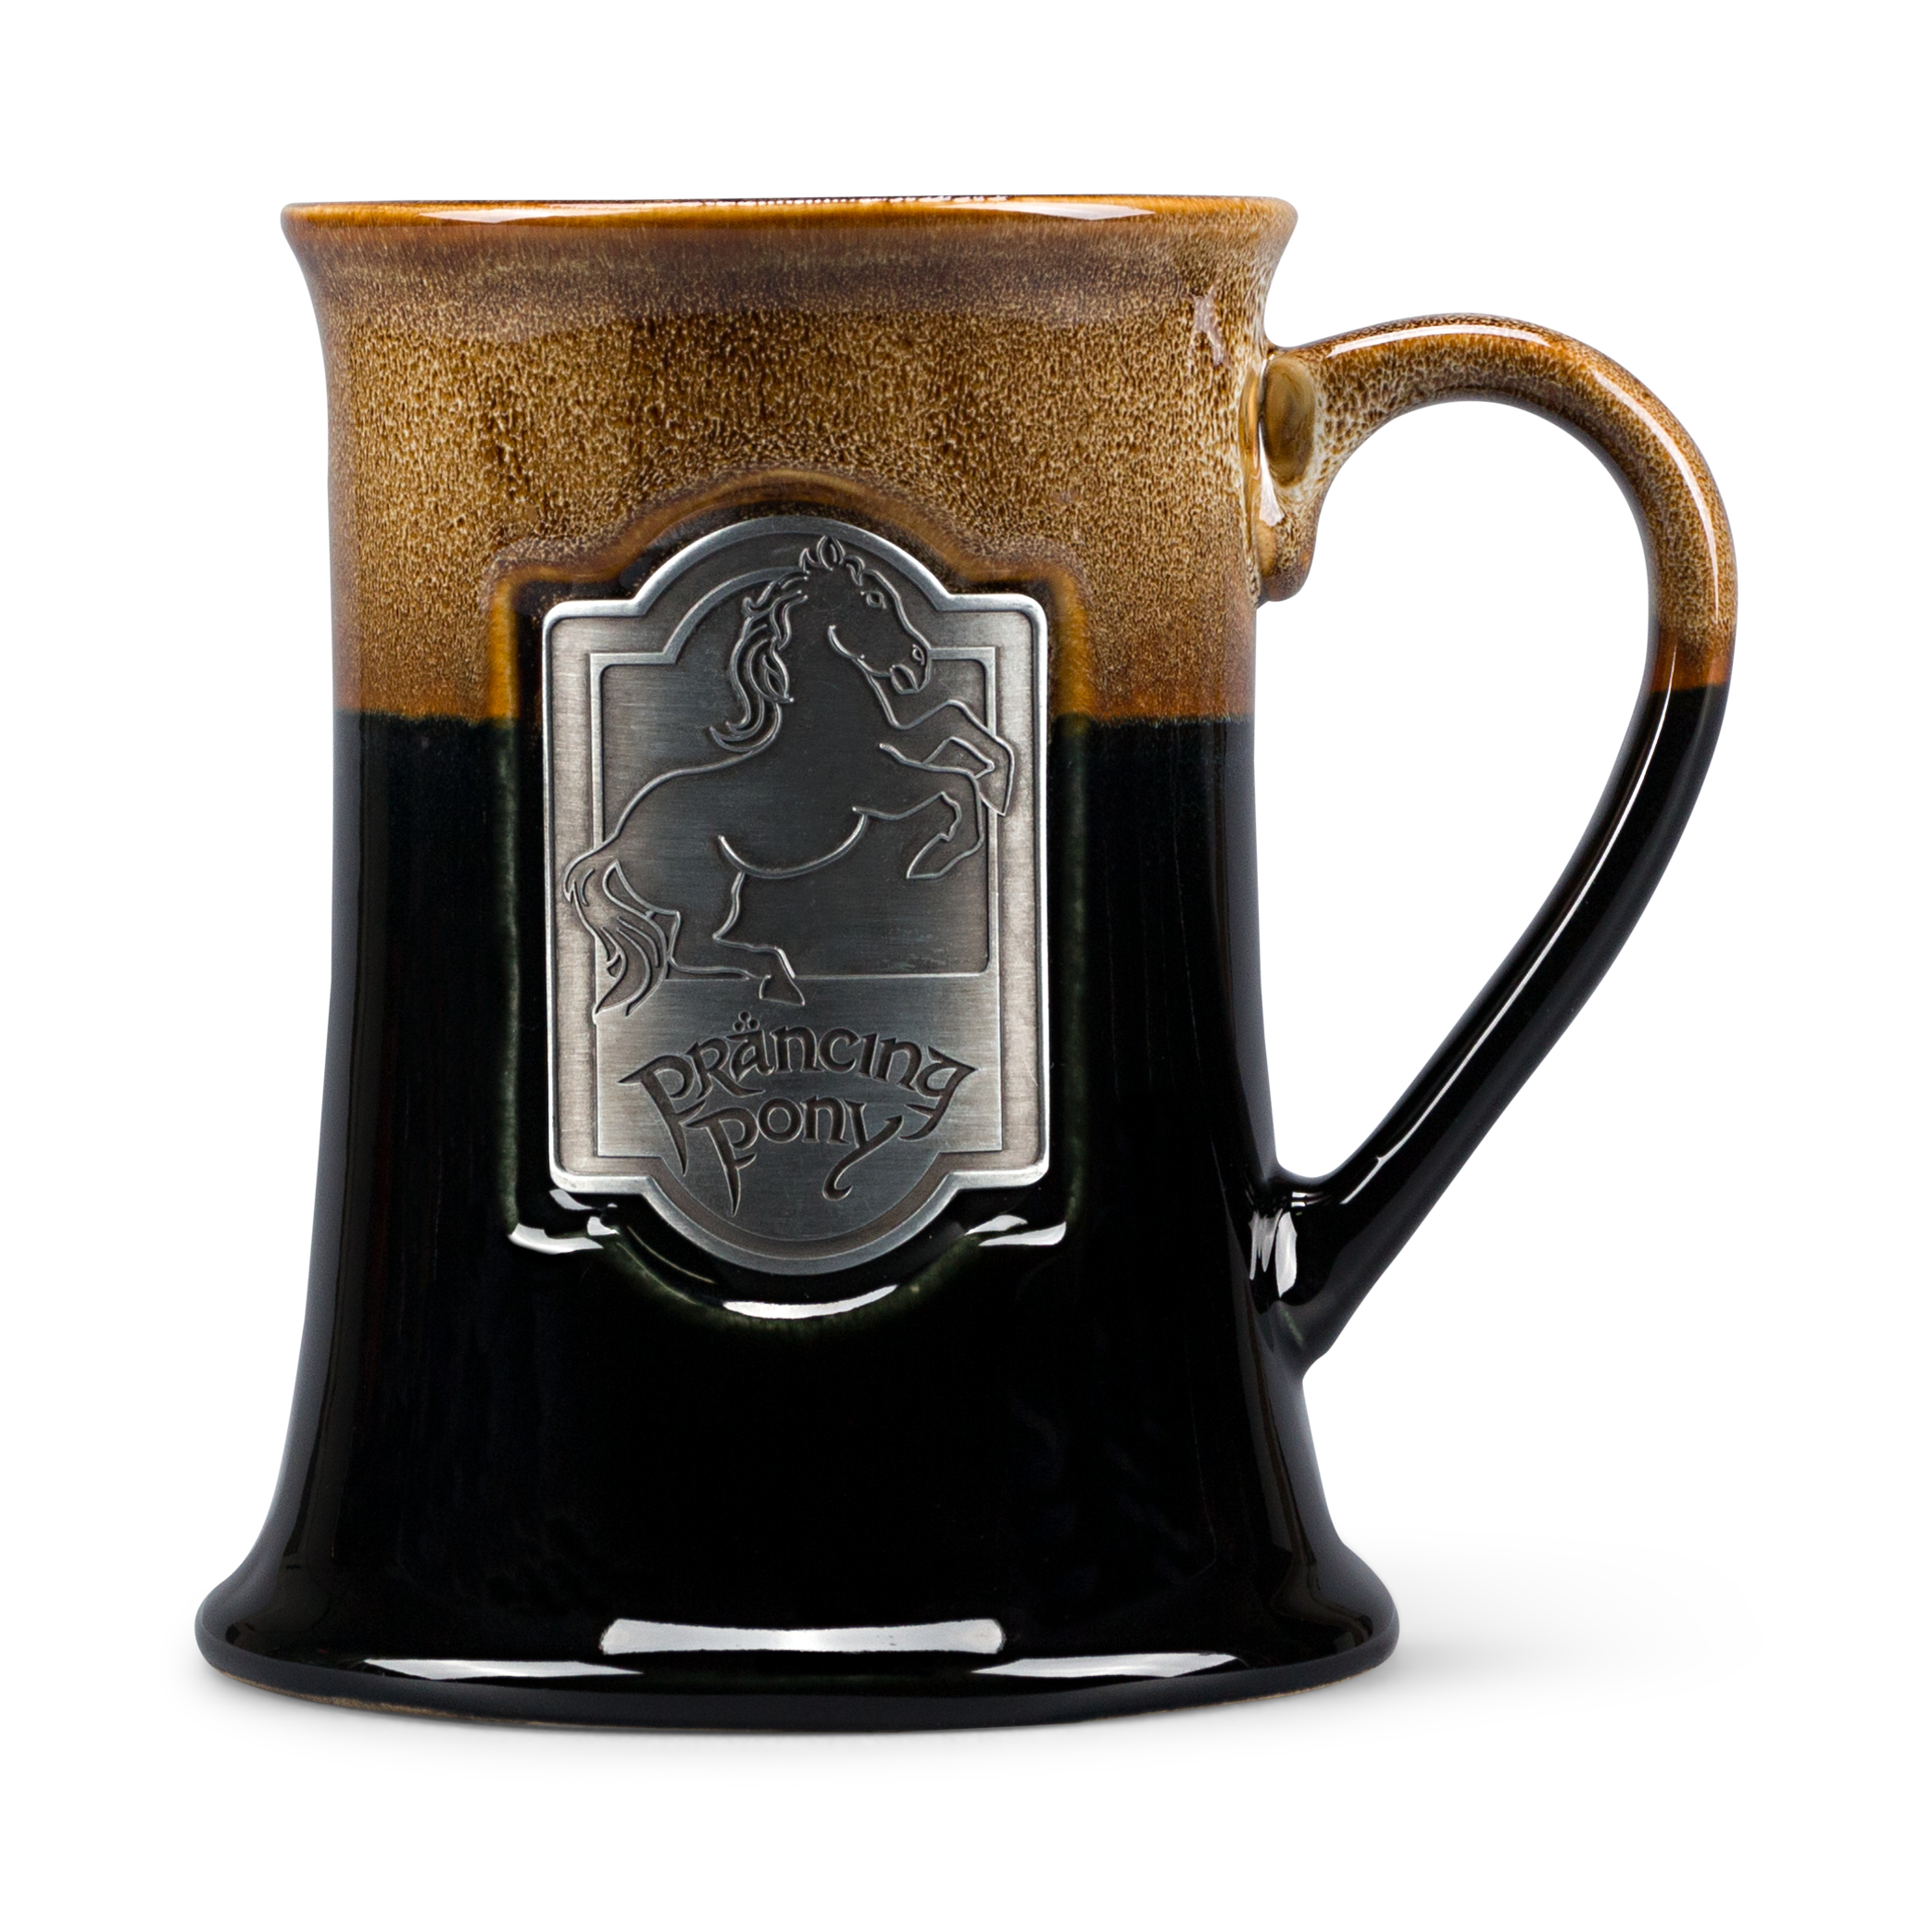 Lord Of The Ring Prancing Pony Ceramic Coffee Mug Cup Tankard Stein Decor